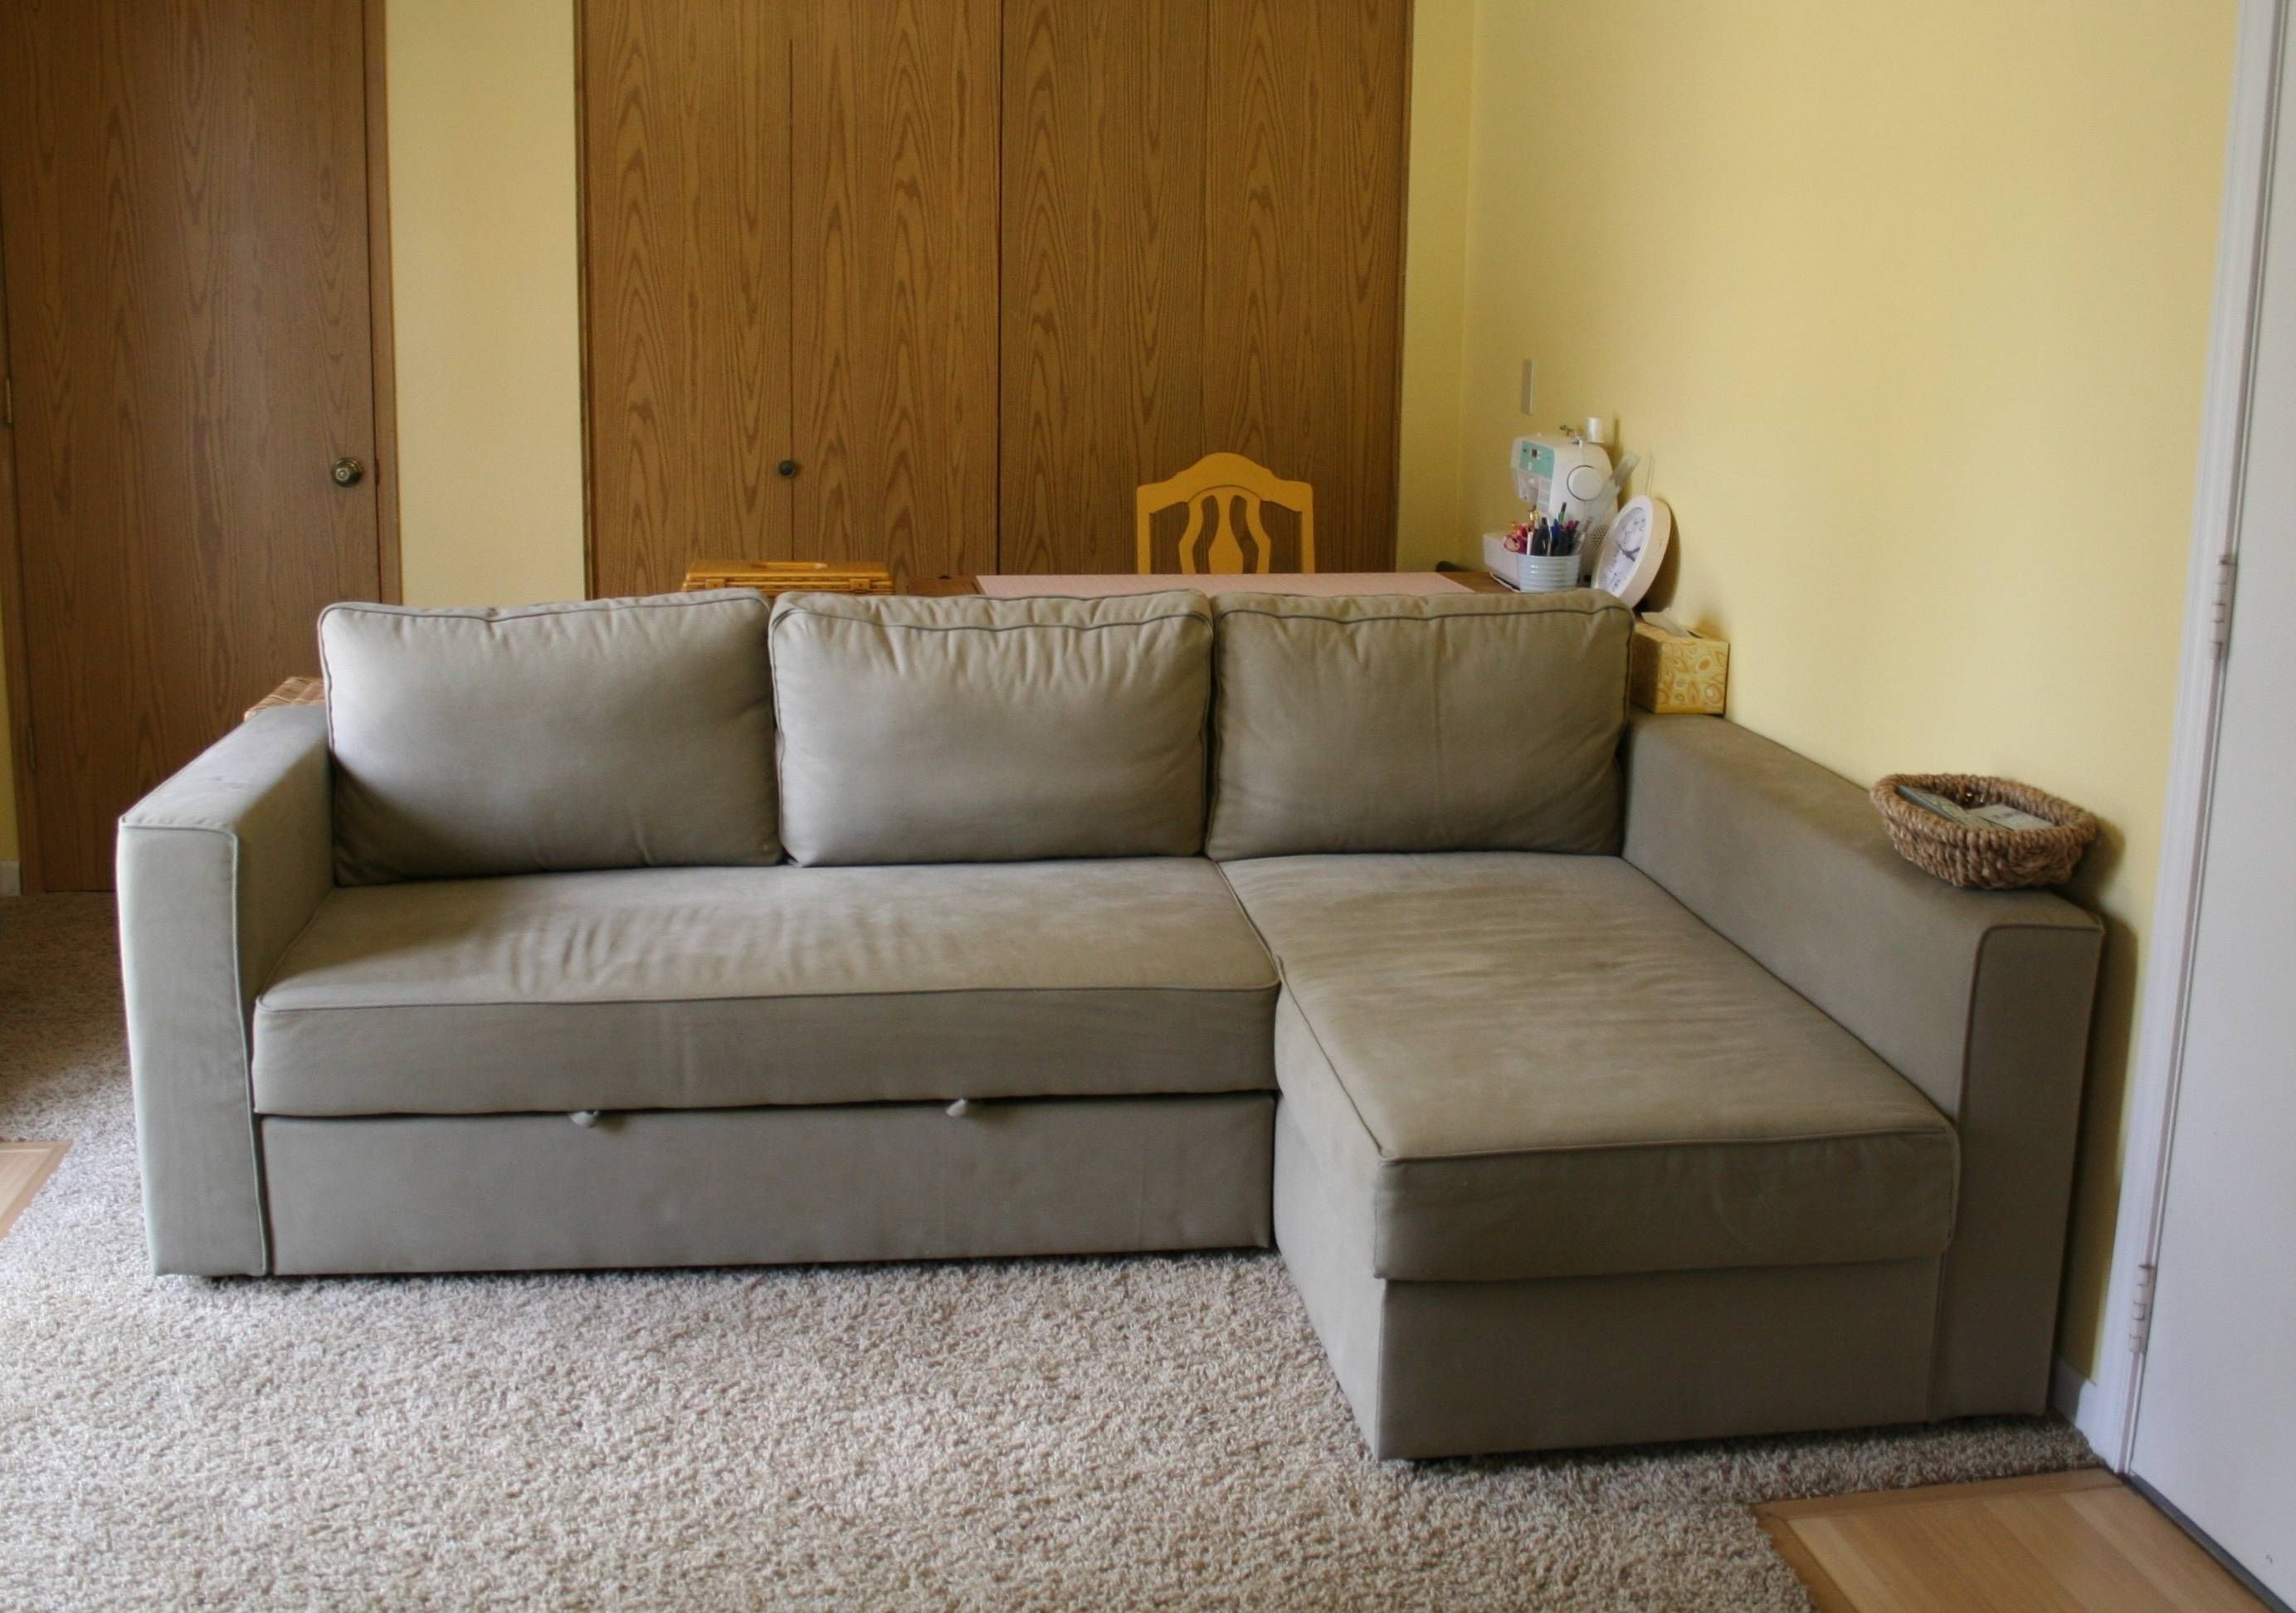 cheap ikea sofa bed